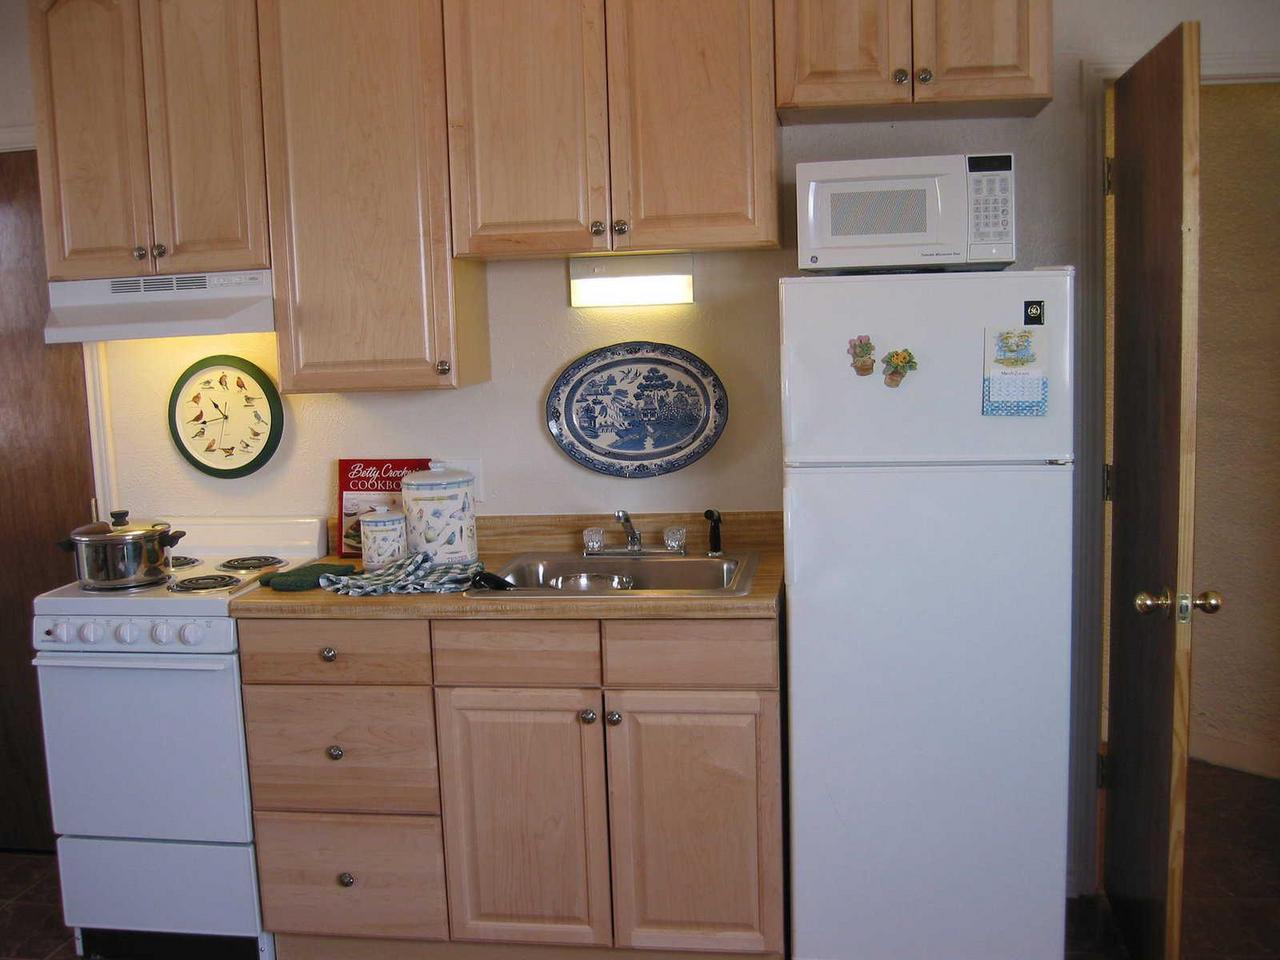 Kitchen with range, fridge, and microwave.